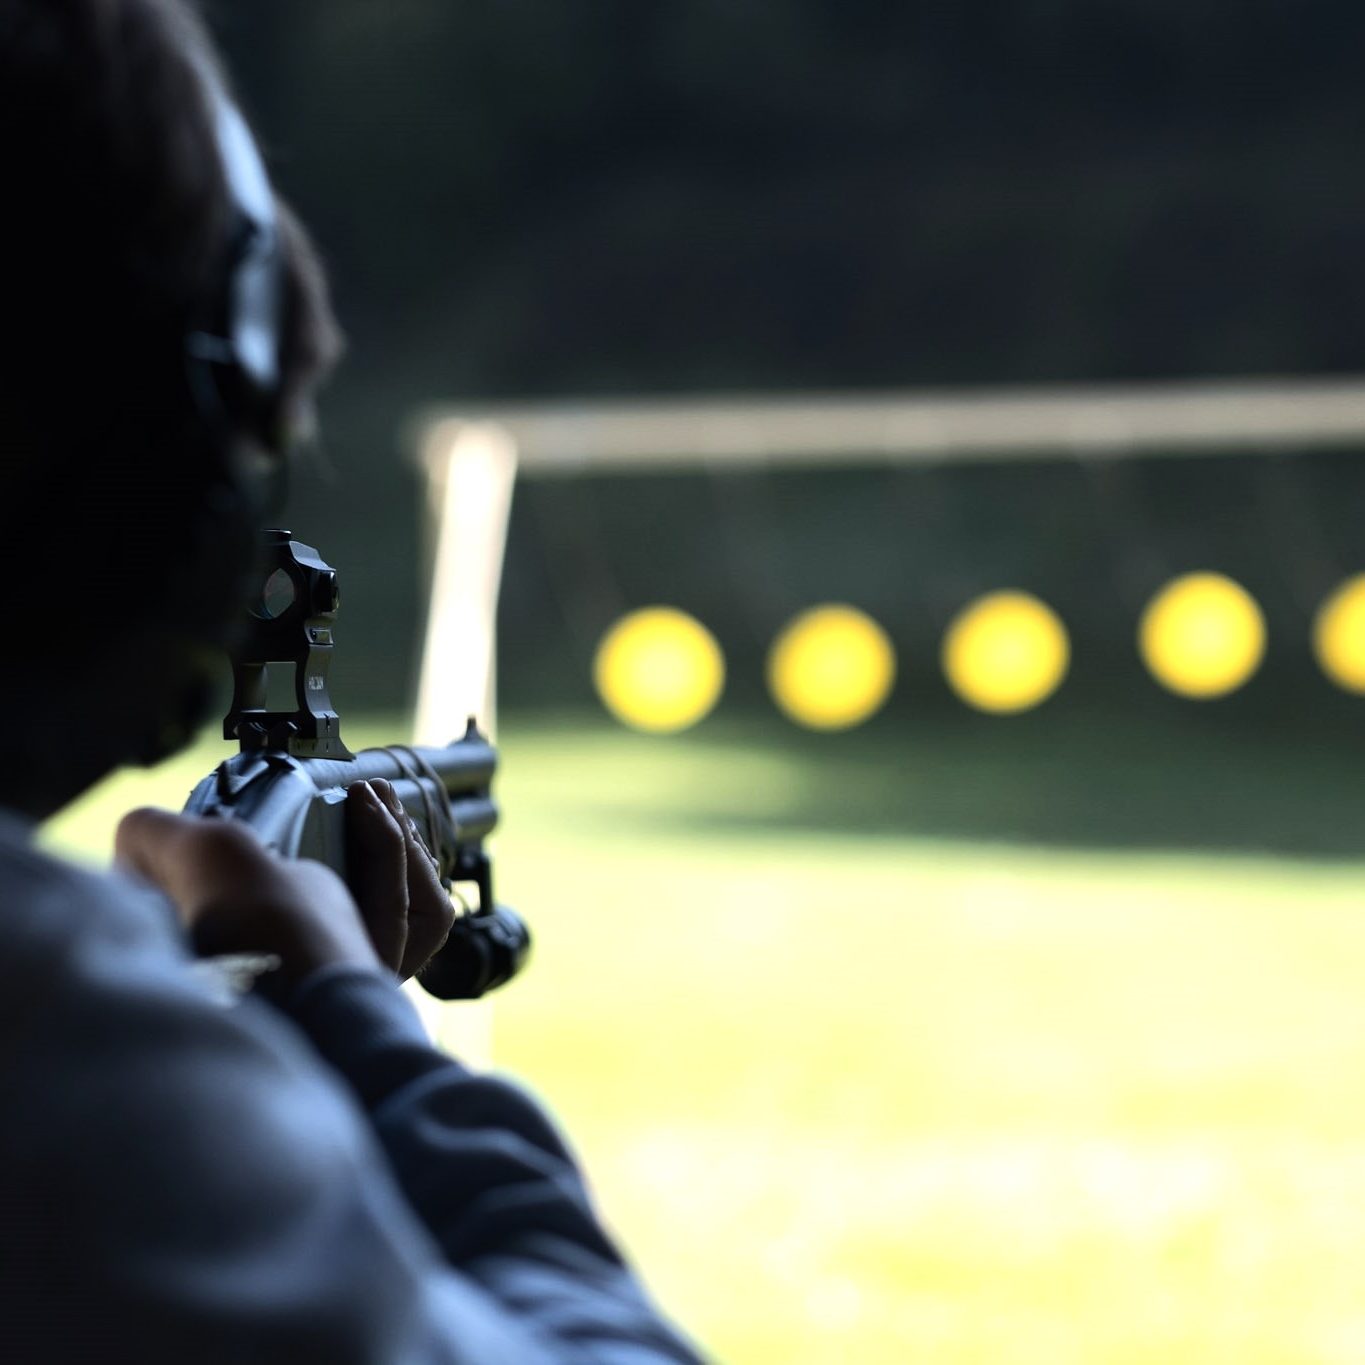 Schießstand Kärnten Shooting Range Blintendorf